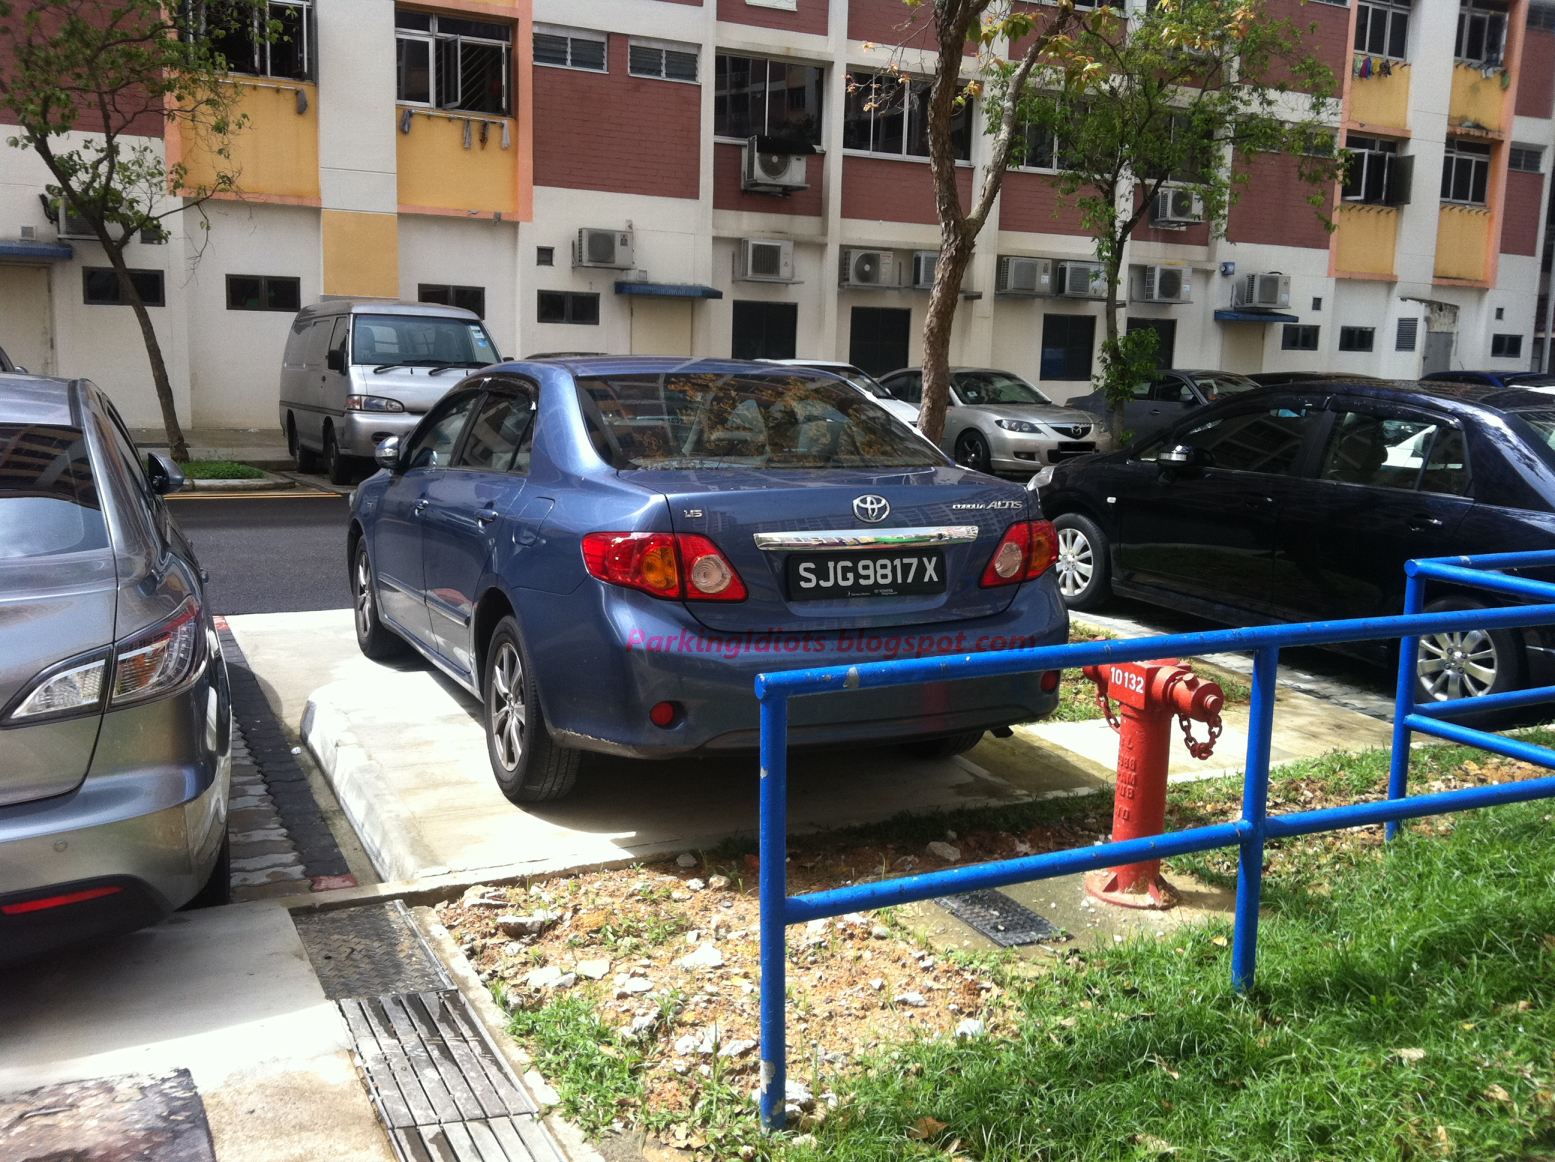 Parking Idiots in Singapore